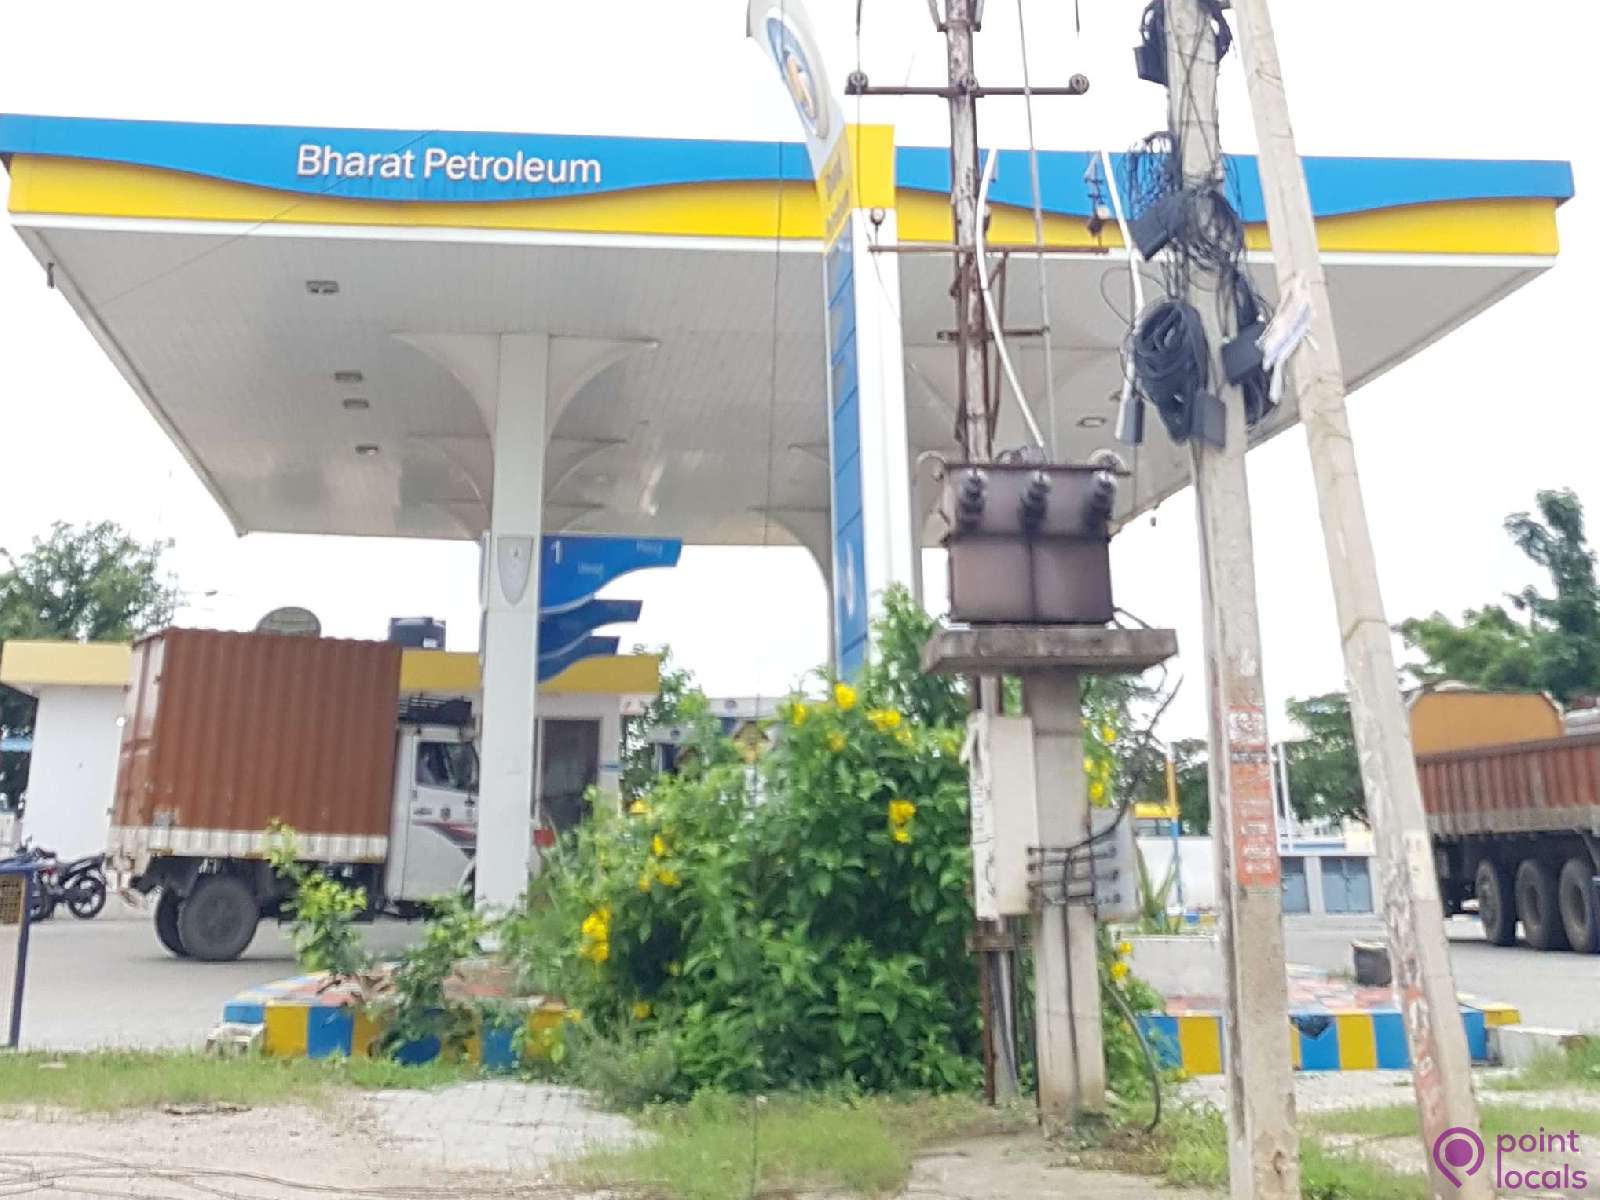 Bharat Petroleum Petrol Pump - Bharat Petroleum Petrol Pump in  Hyderabad,Telangana | Pointlocals